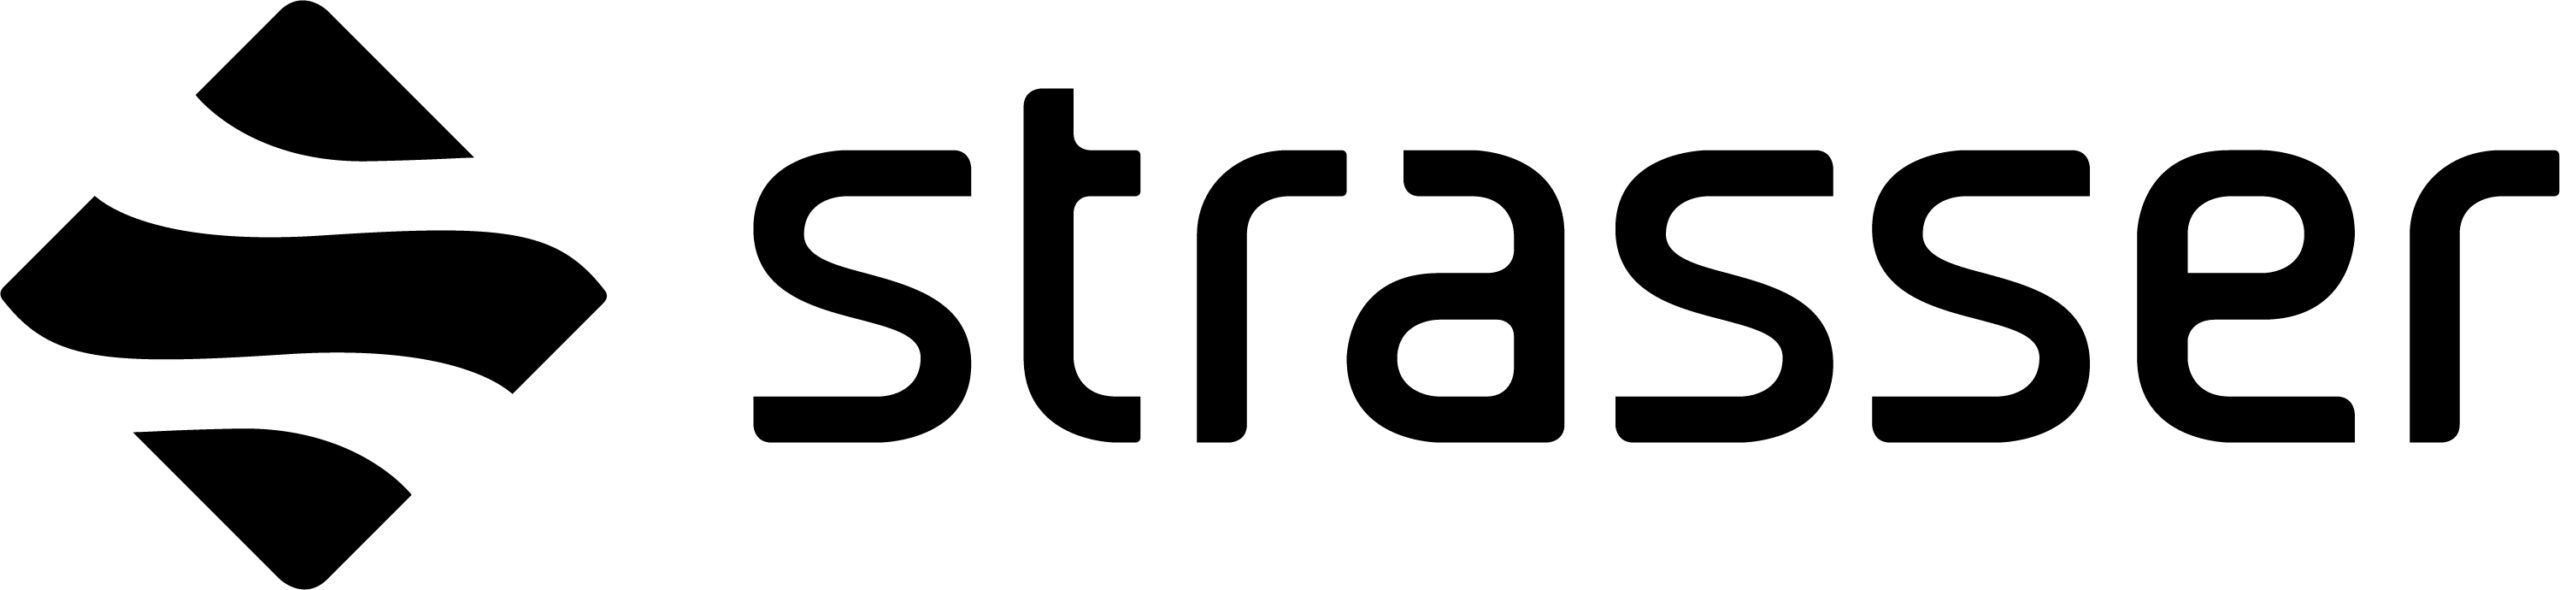 strasser-logo